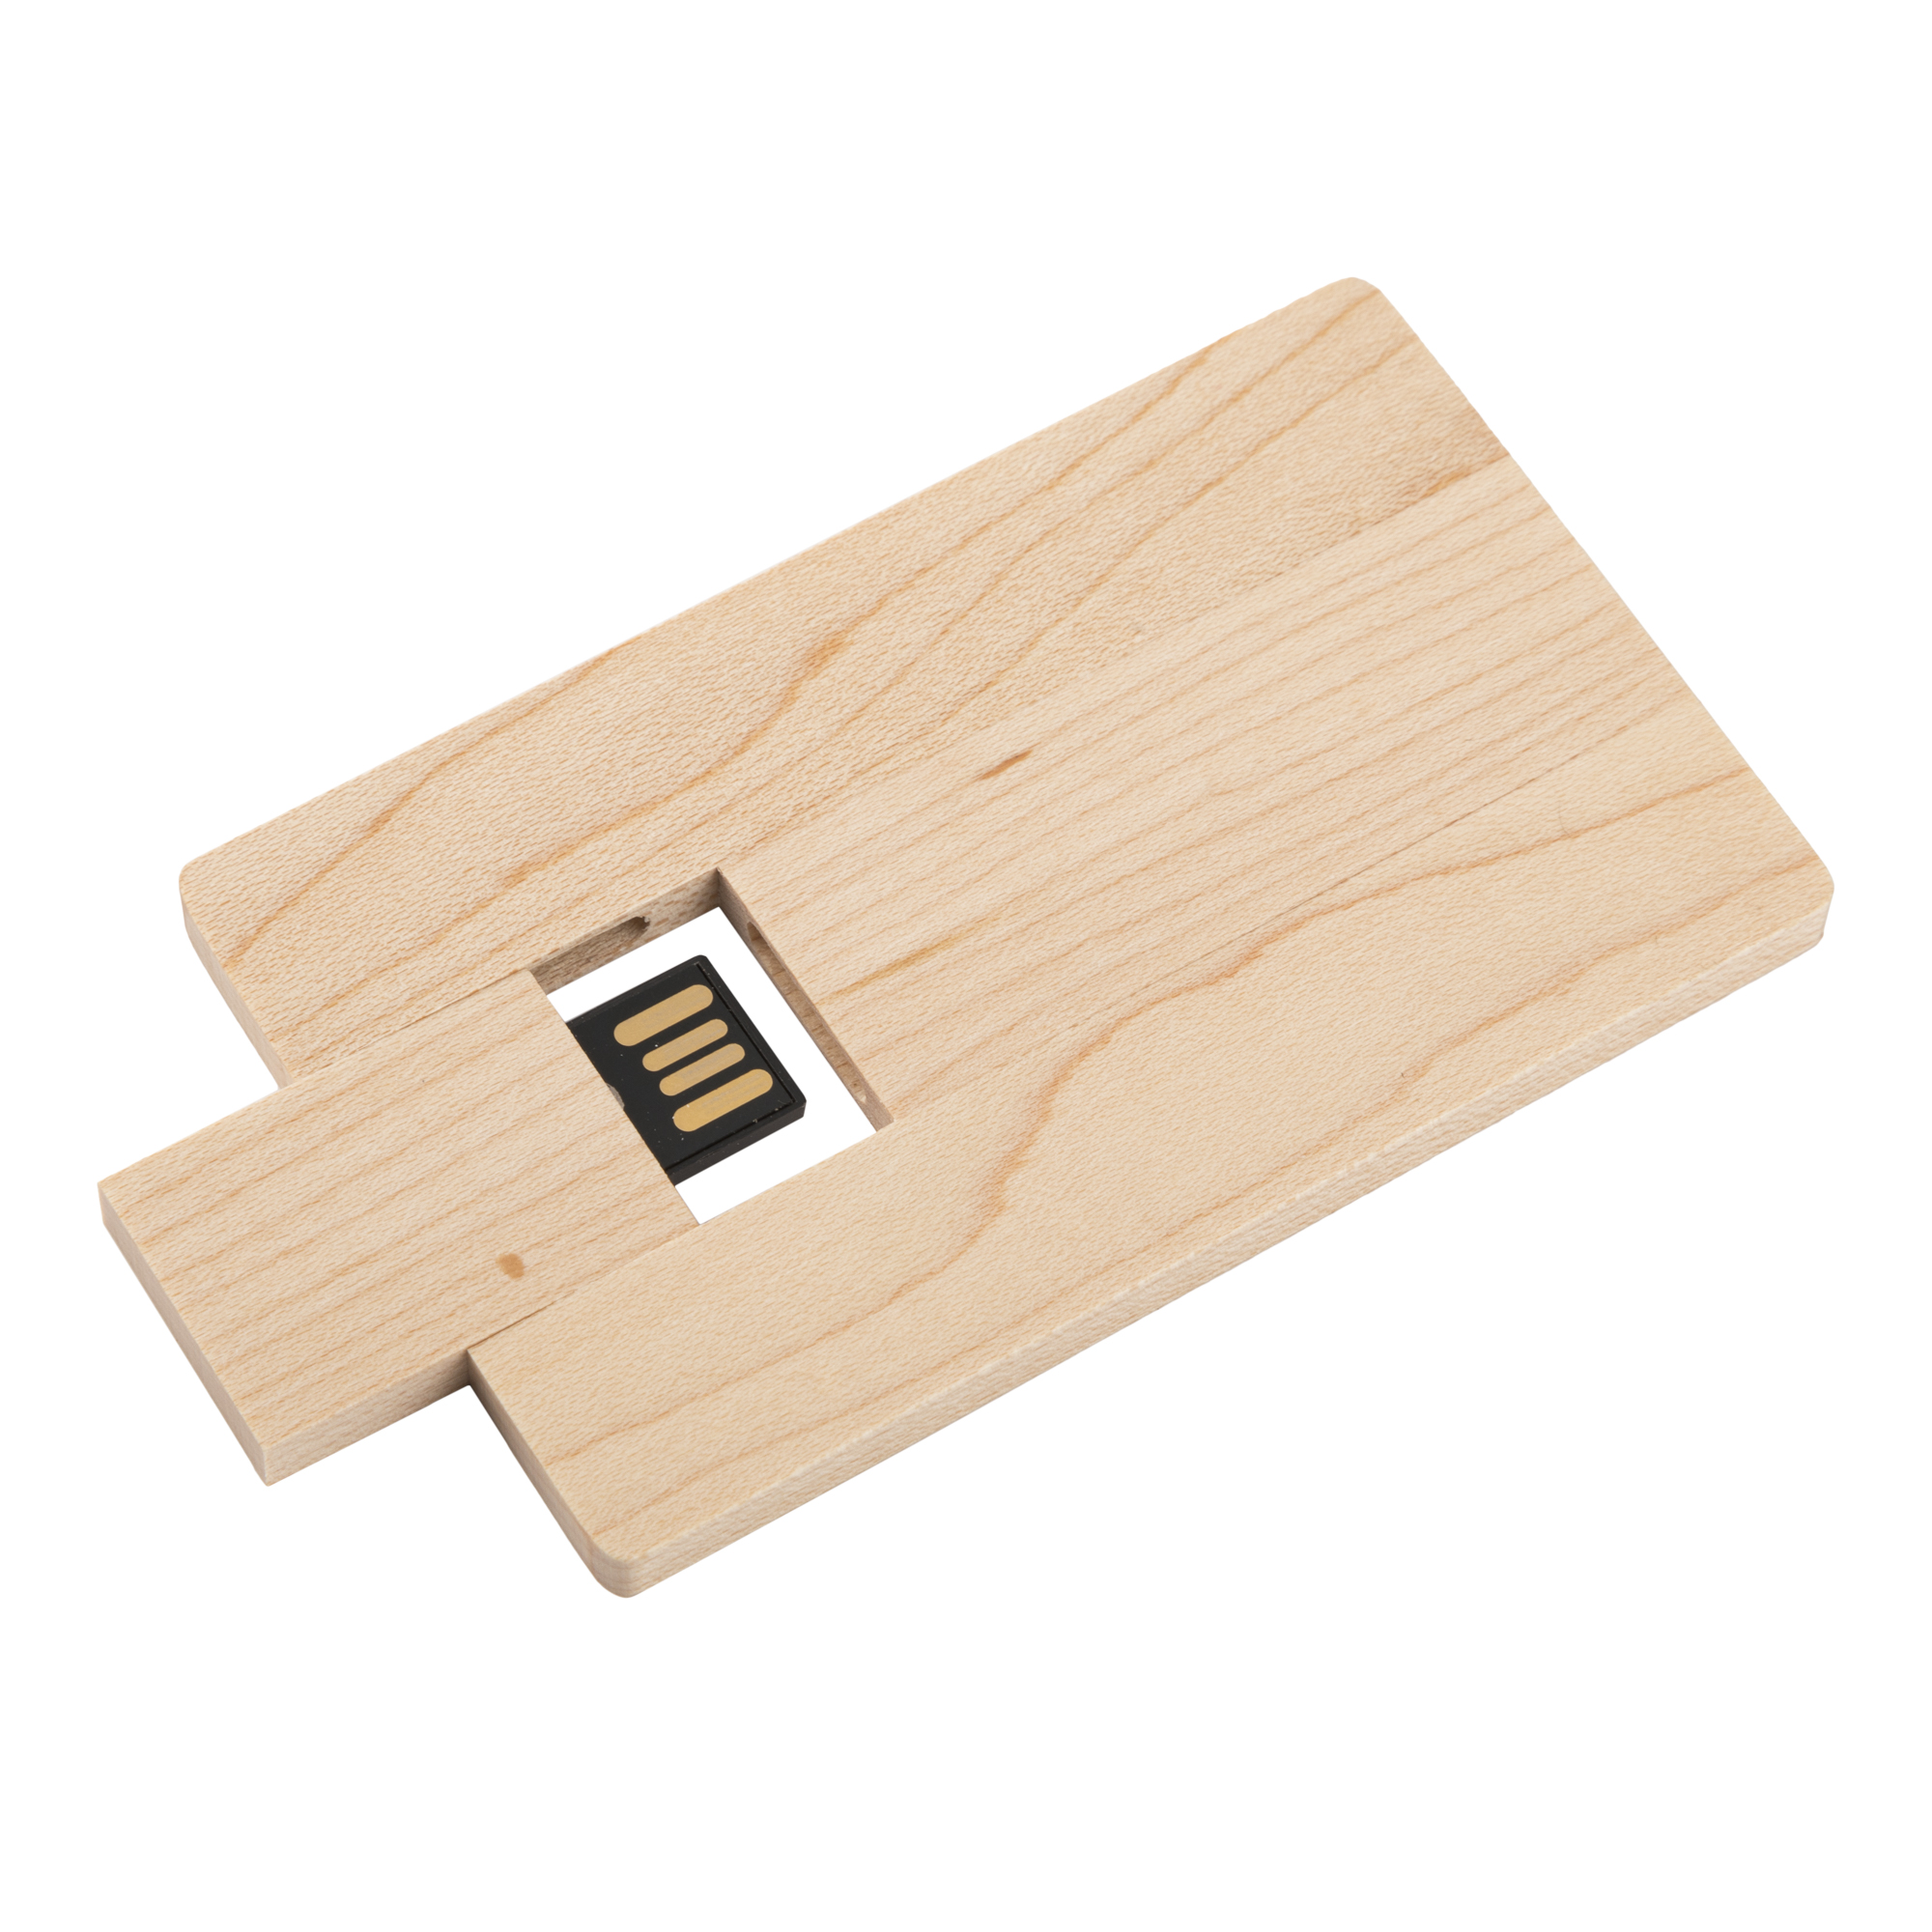 USB-флешка модель 792, цвет Light , объем памяти 64 GB